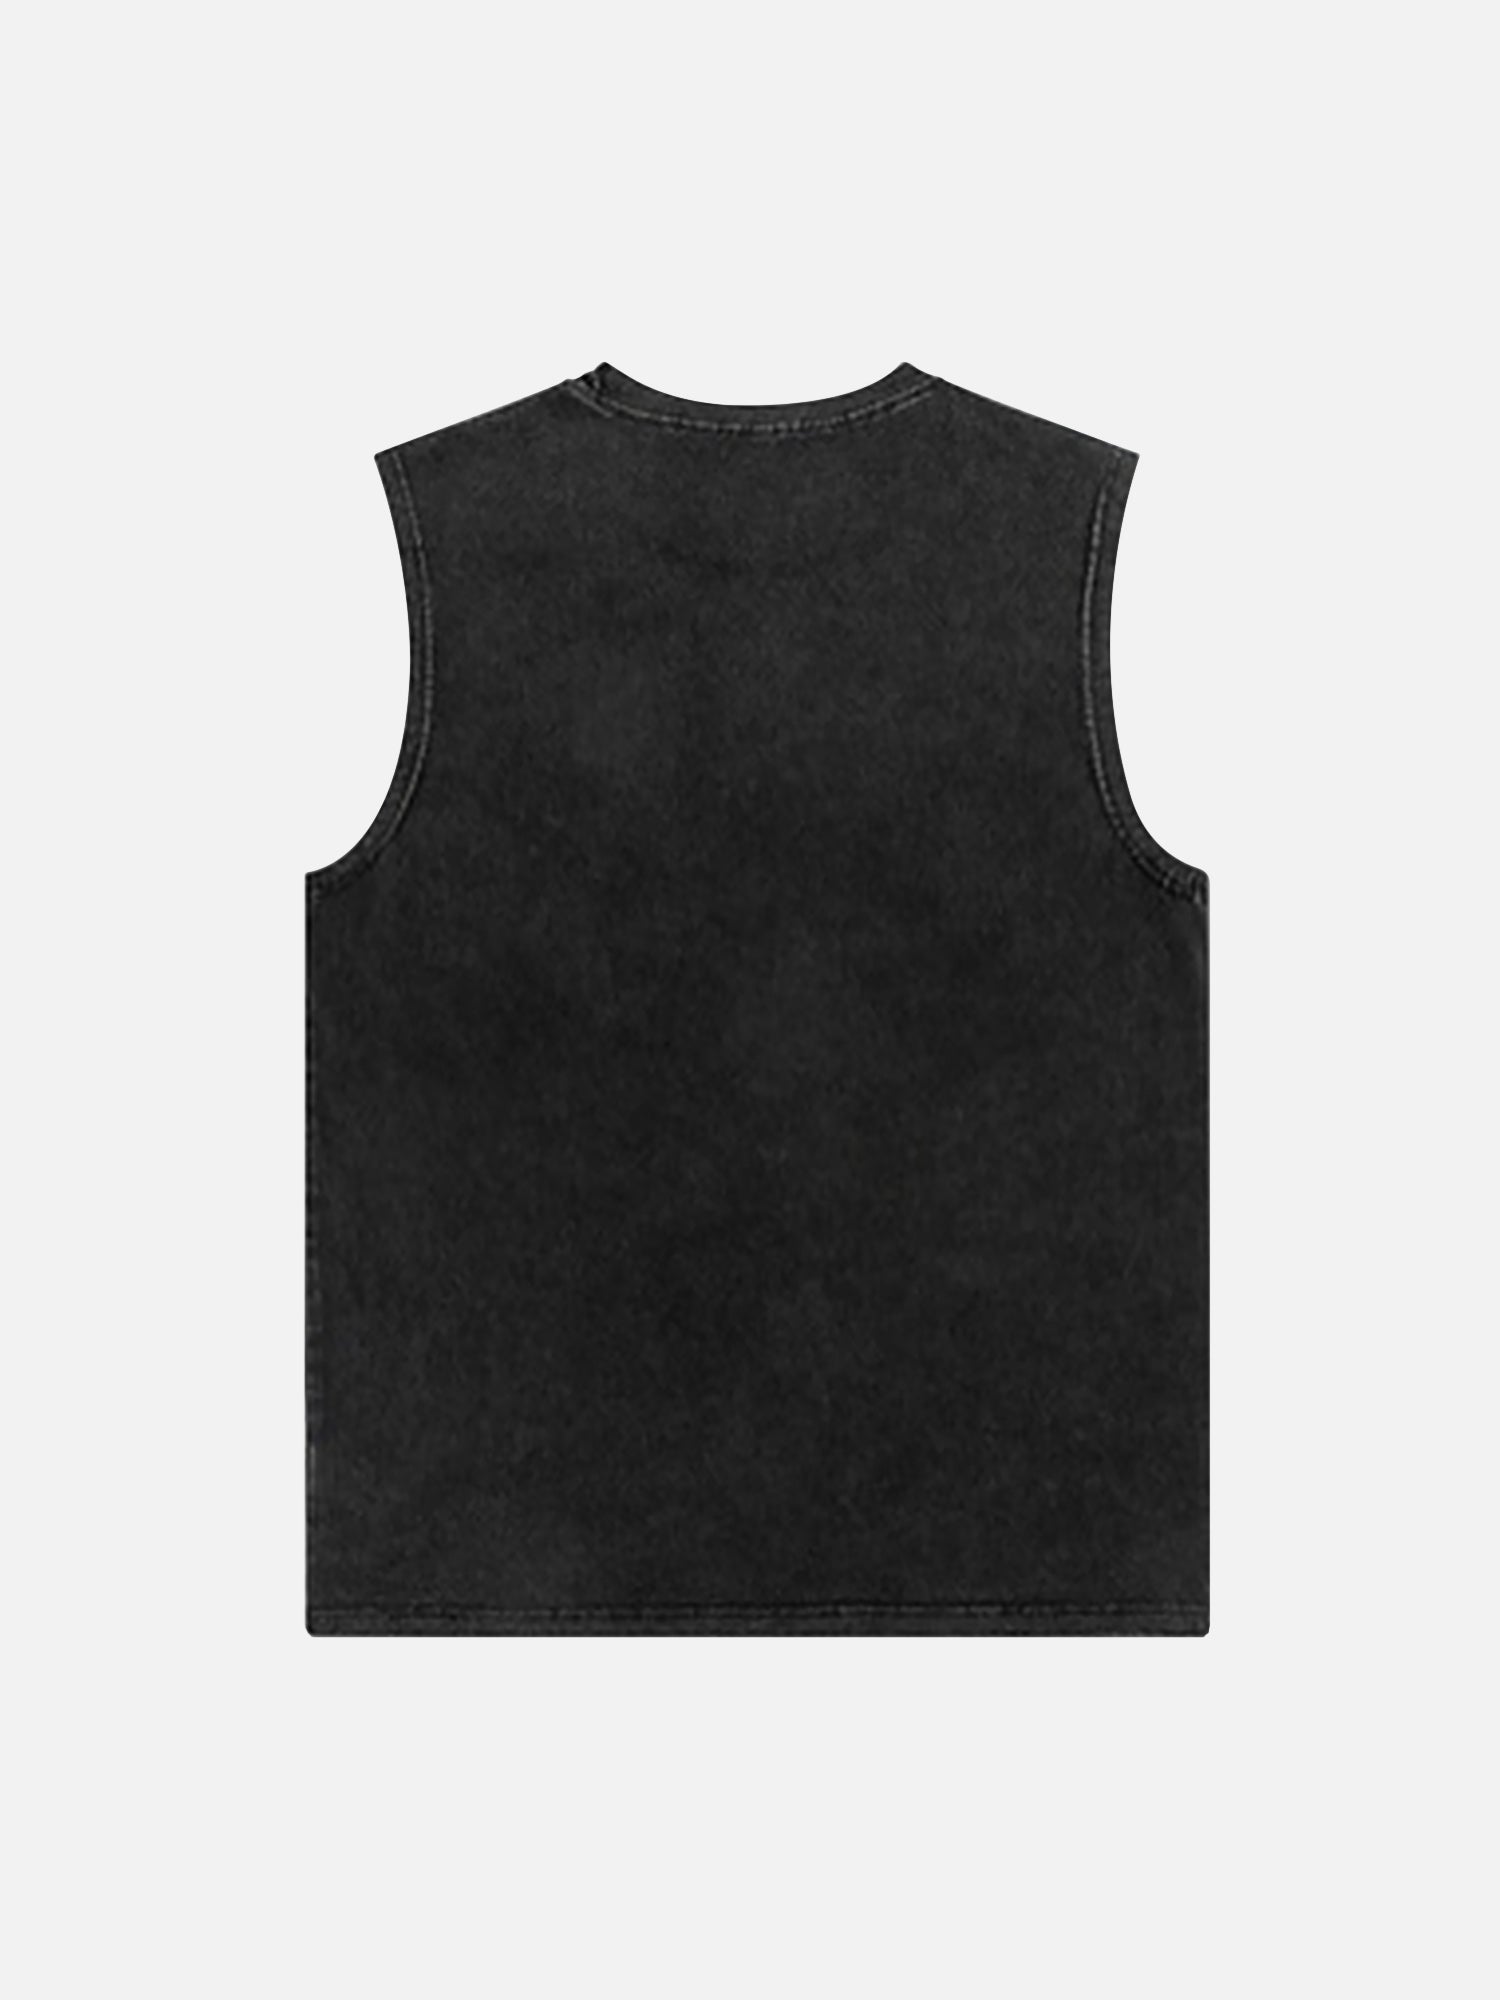 Thesupermade High Street Hiphop Washed Distressed Art Letter Vest